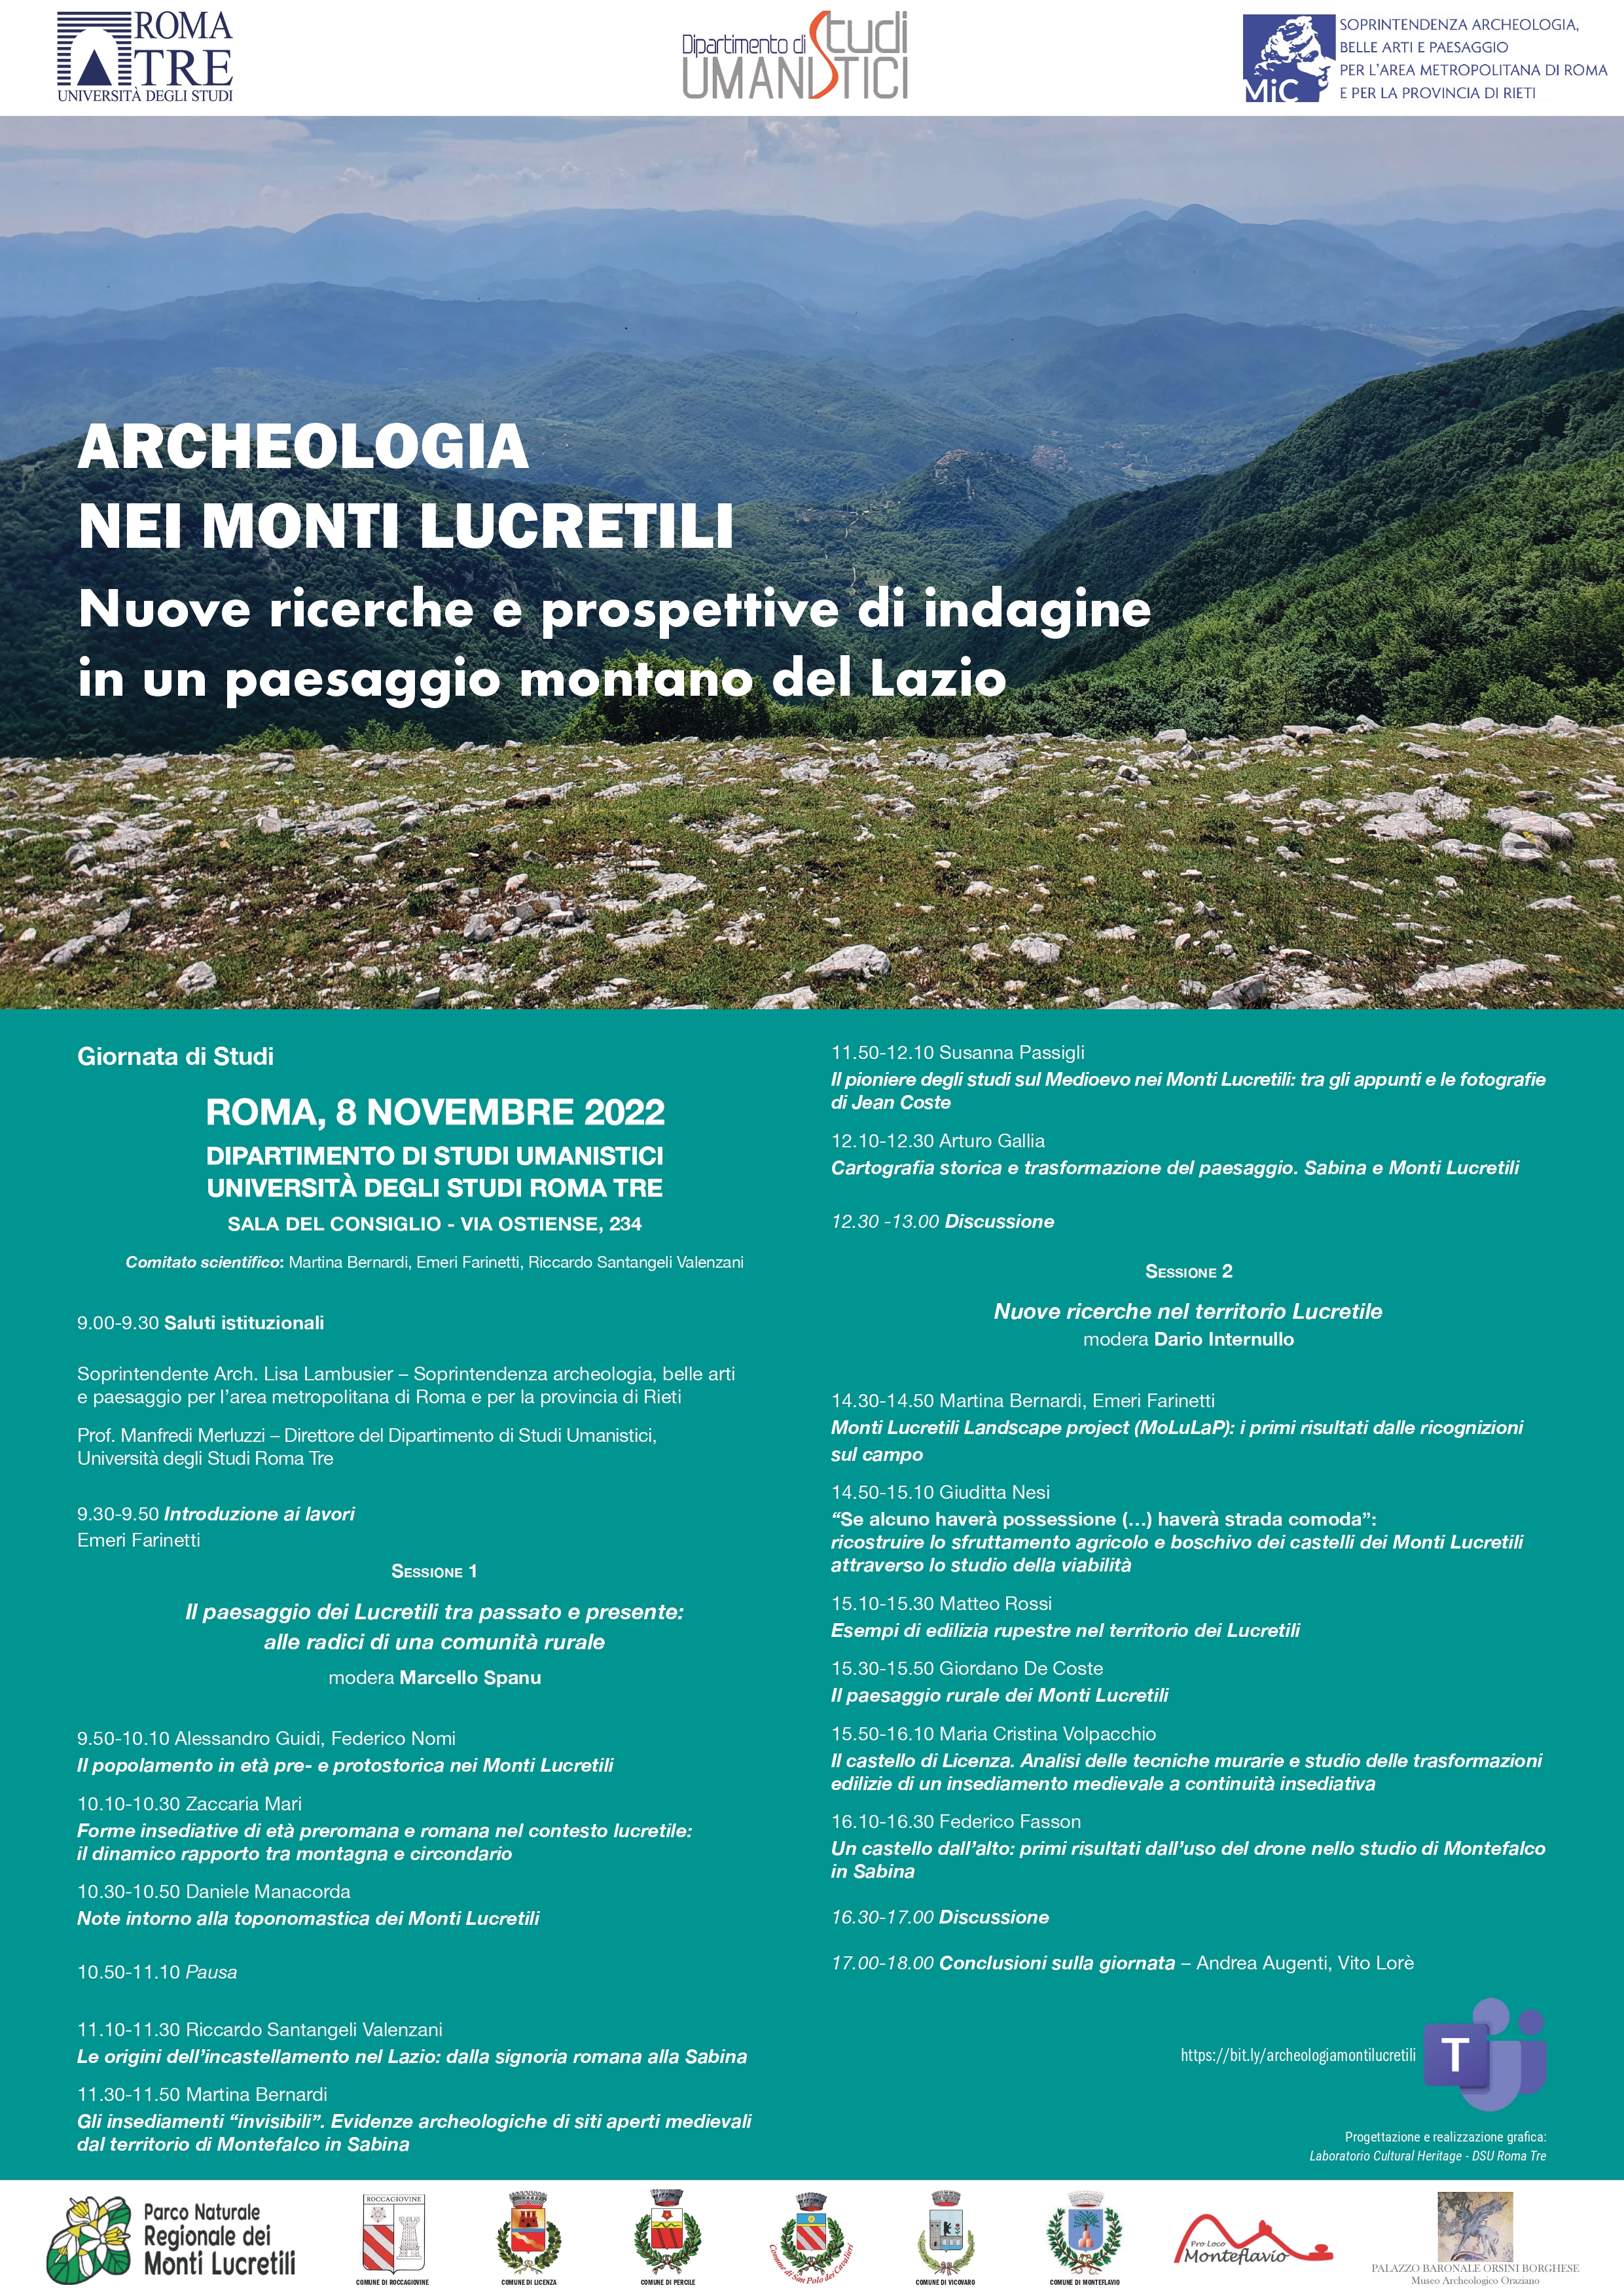 https://www.agenziaeventi.org/immagini_news/3222/martedi-8-novembre-giornata-di-studi-archeologia-nei-monti-lucretili-3222.jpg